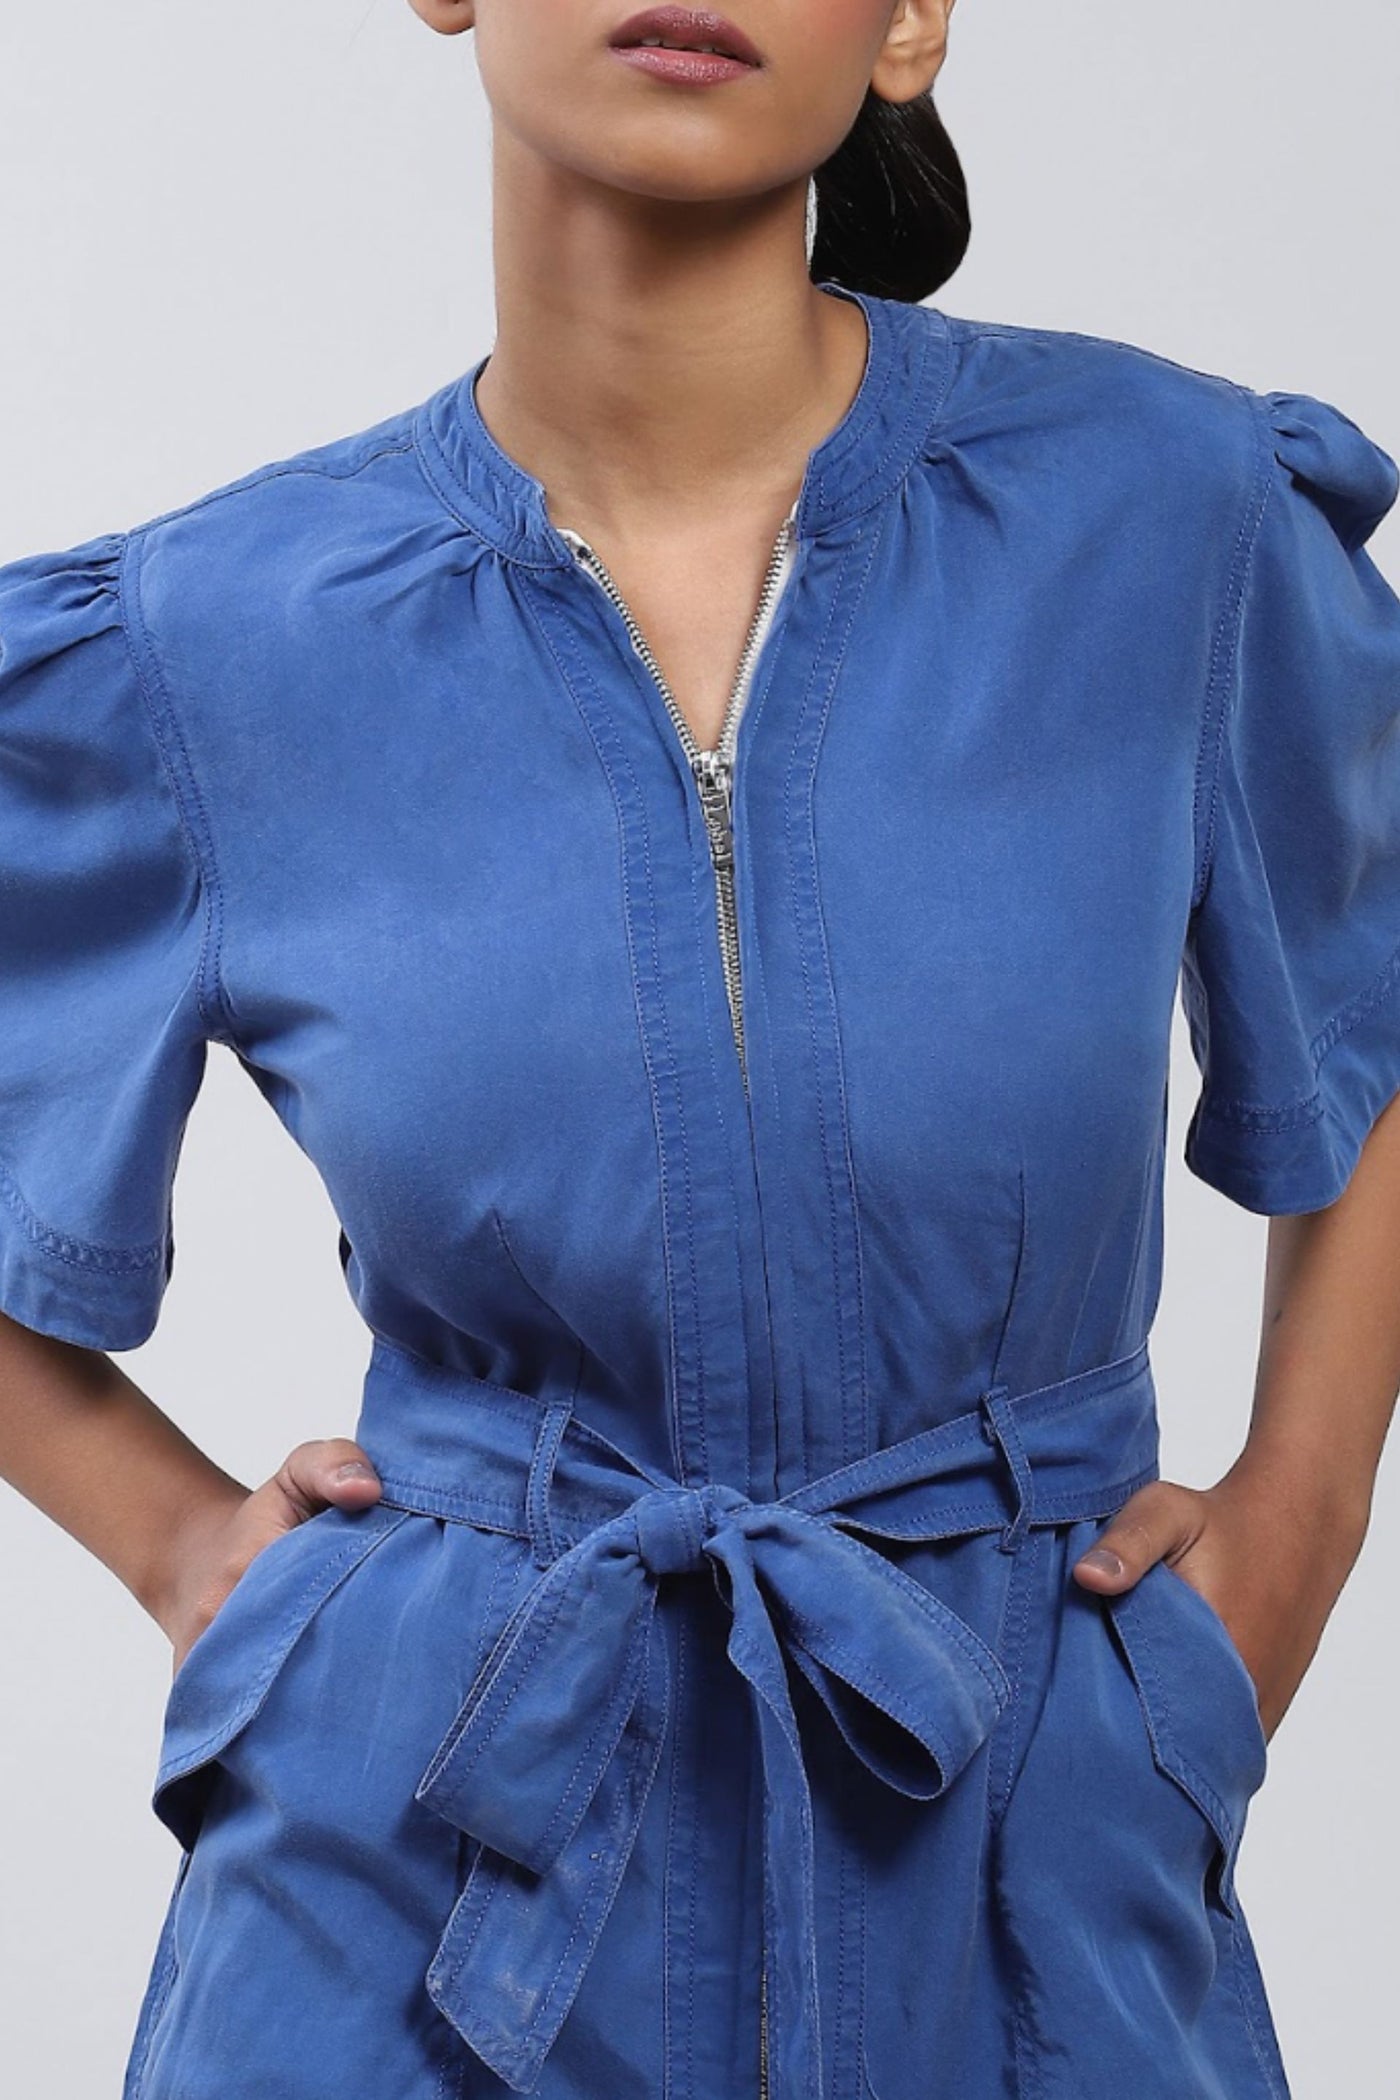 Label Ritu Kumar Electric Blue Front-Zip Playsuit Indian designer wear online shopping melange singapore